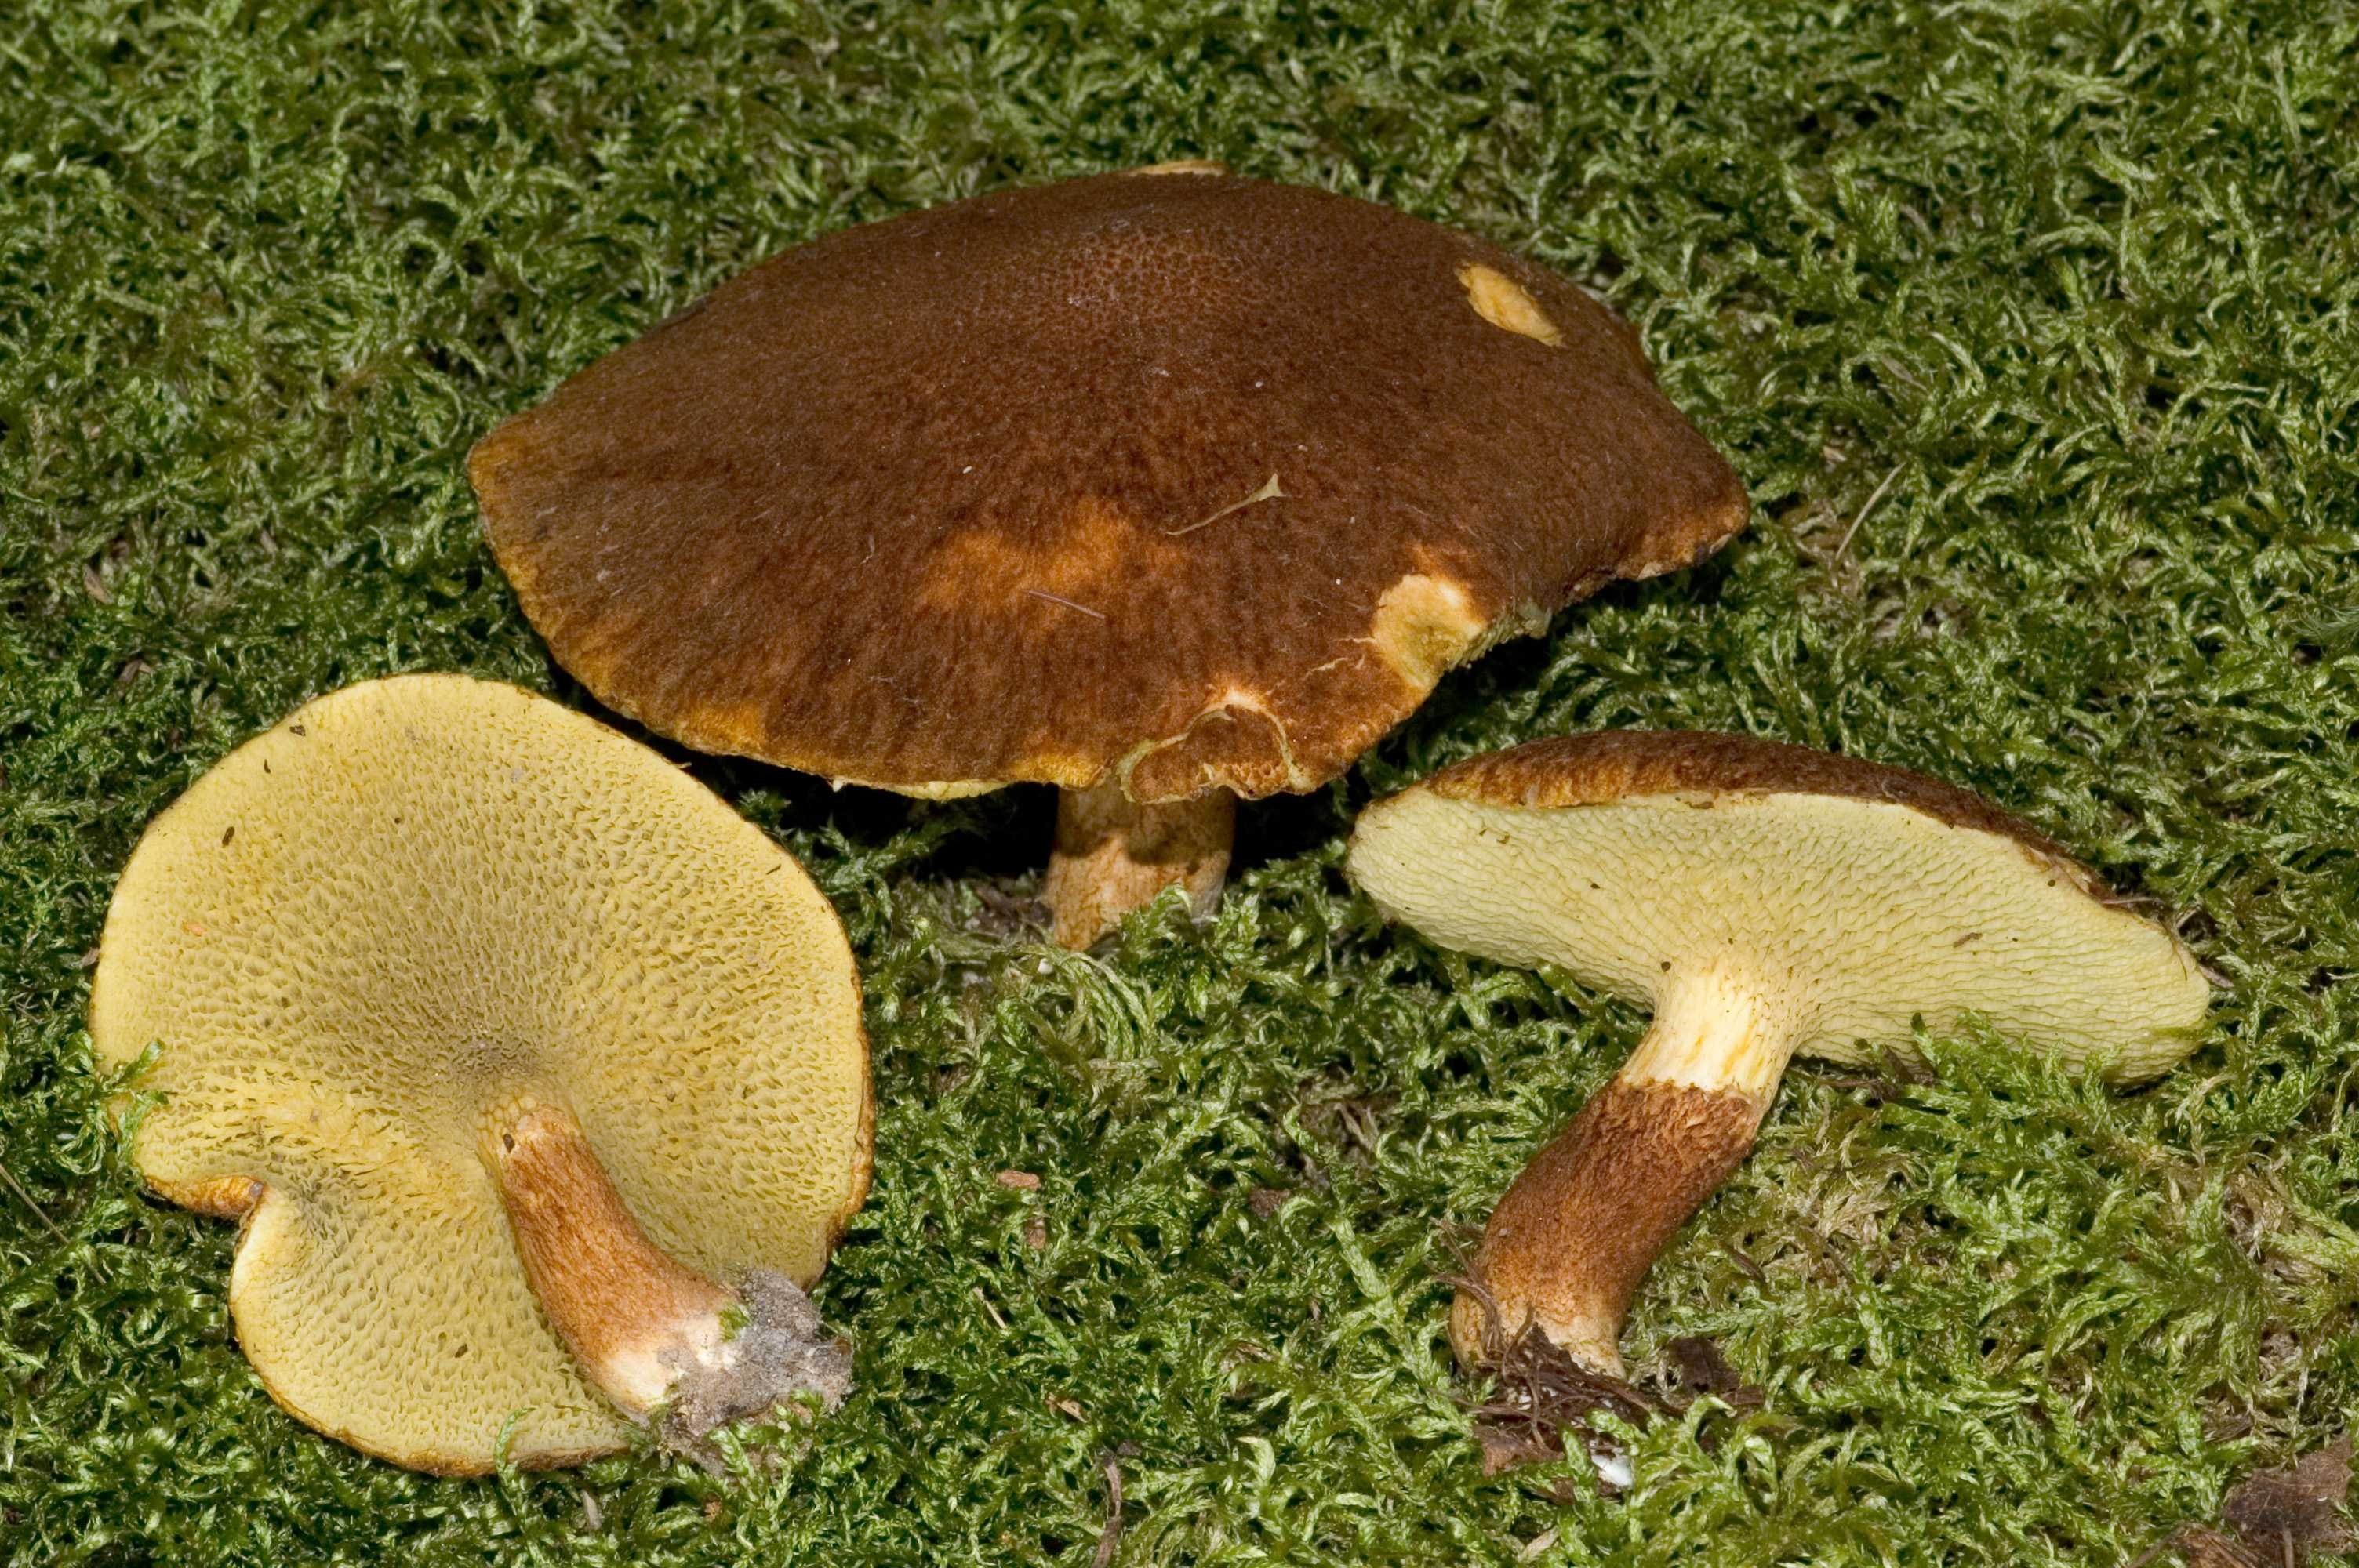 Трубчатый гриб 6